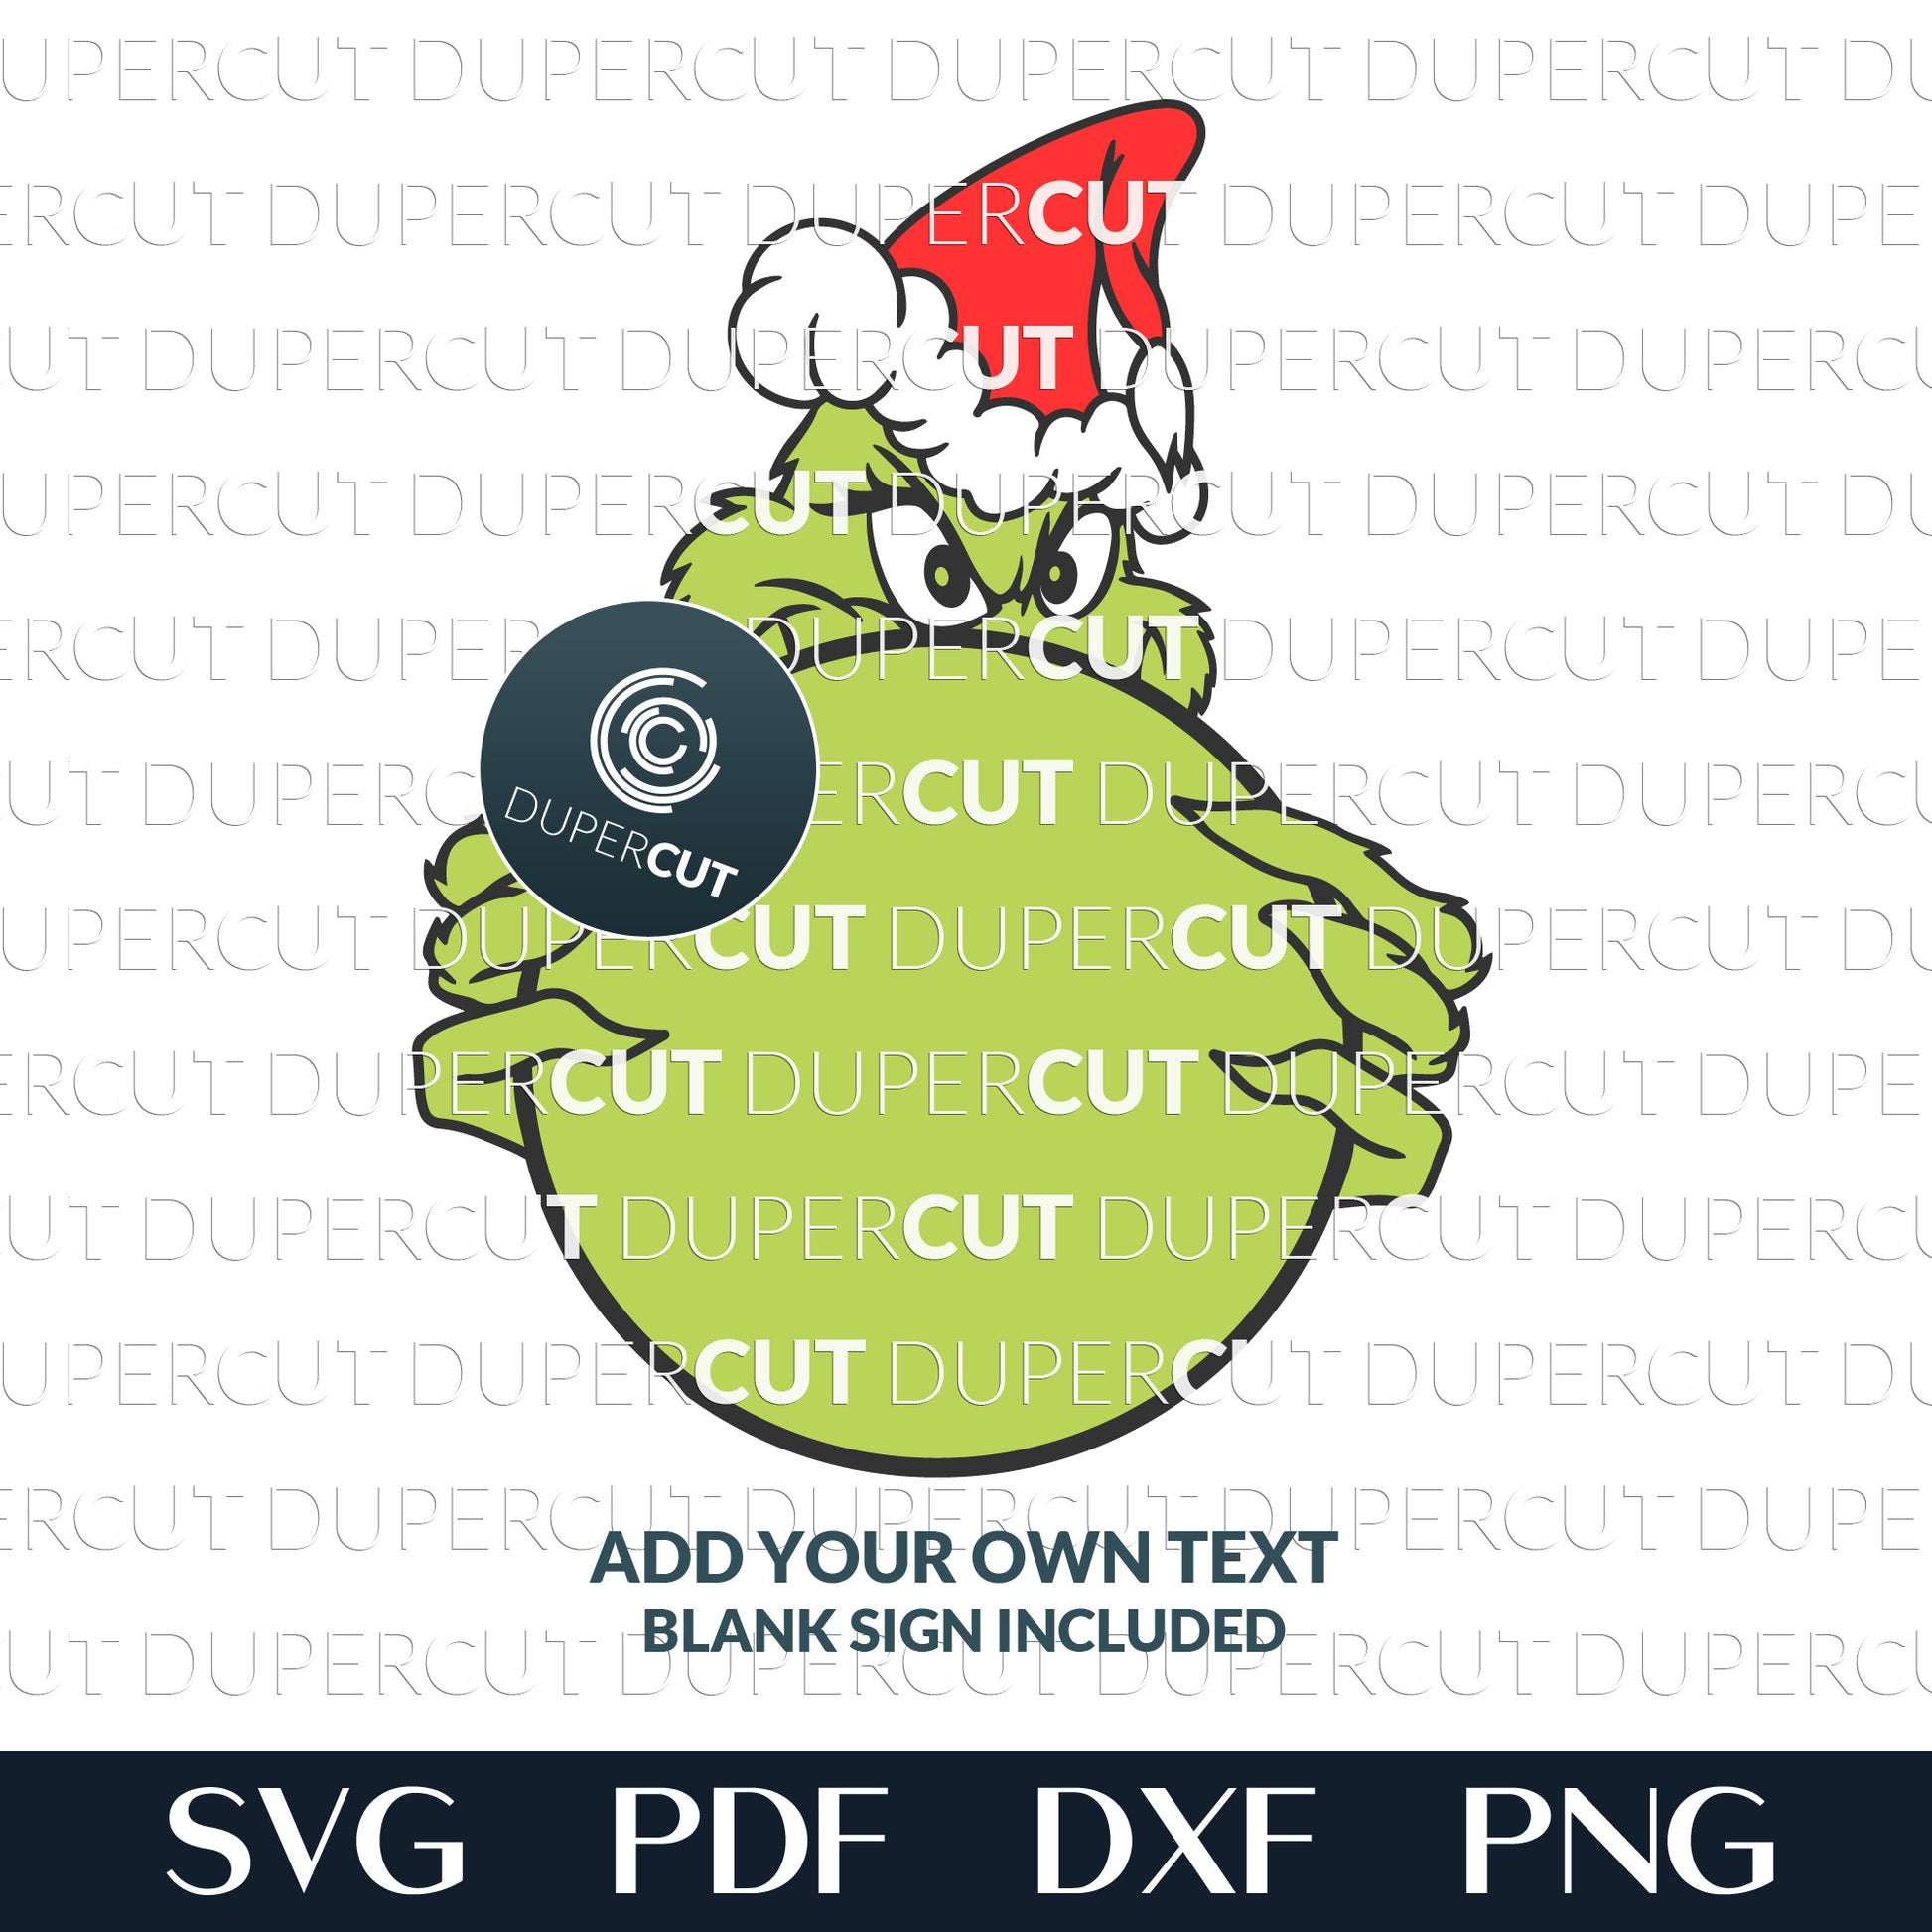 Go Away sign - funny DIY door hangers - SVG DXF layered cutting files for laser Glowforge, Xtool, Cricut, CNC plasma machines, scroll saw pattern by www.DuperCut.com